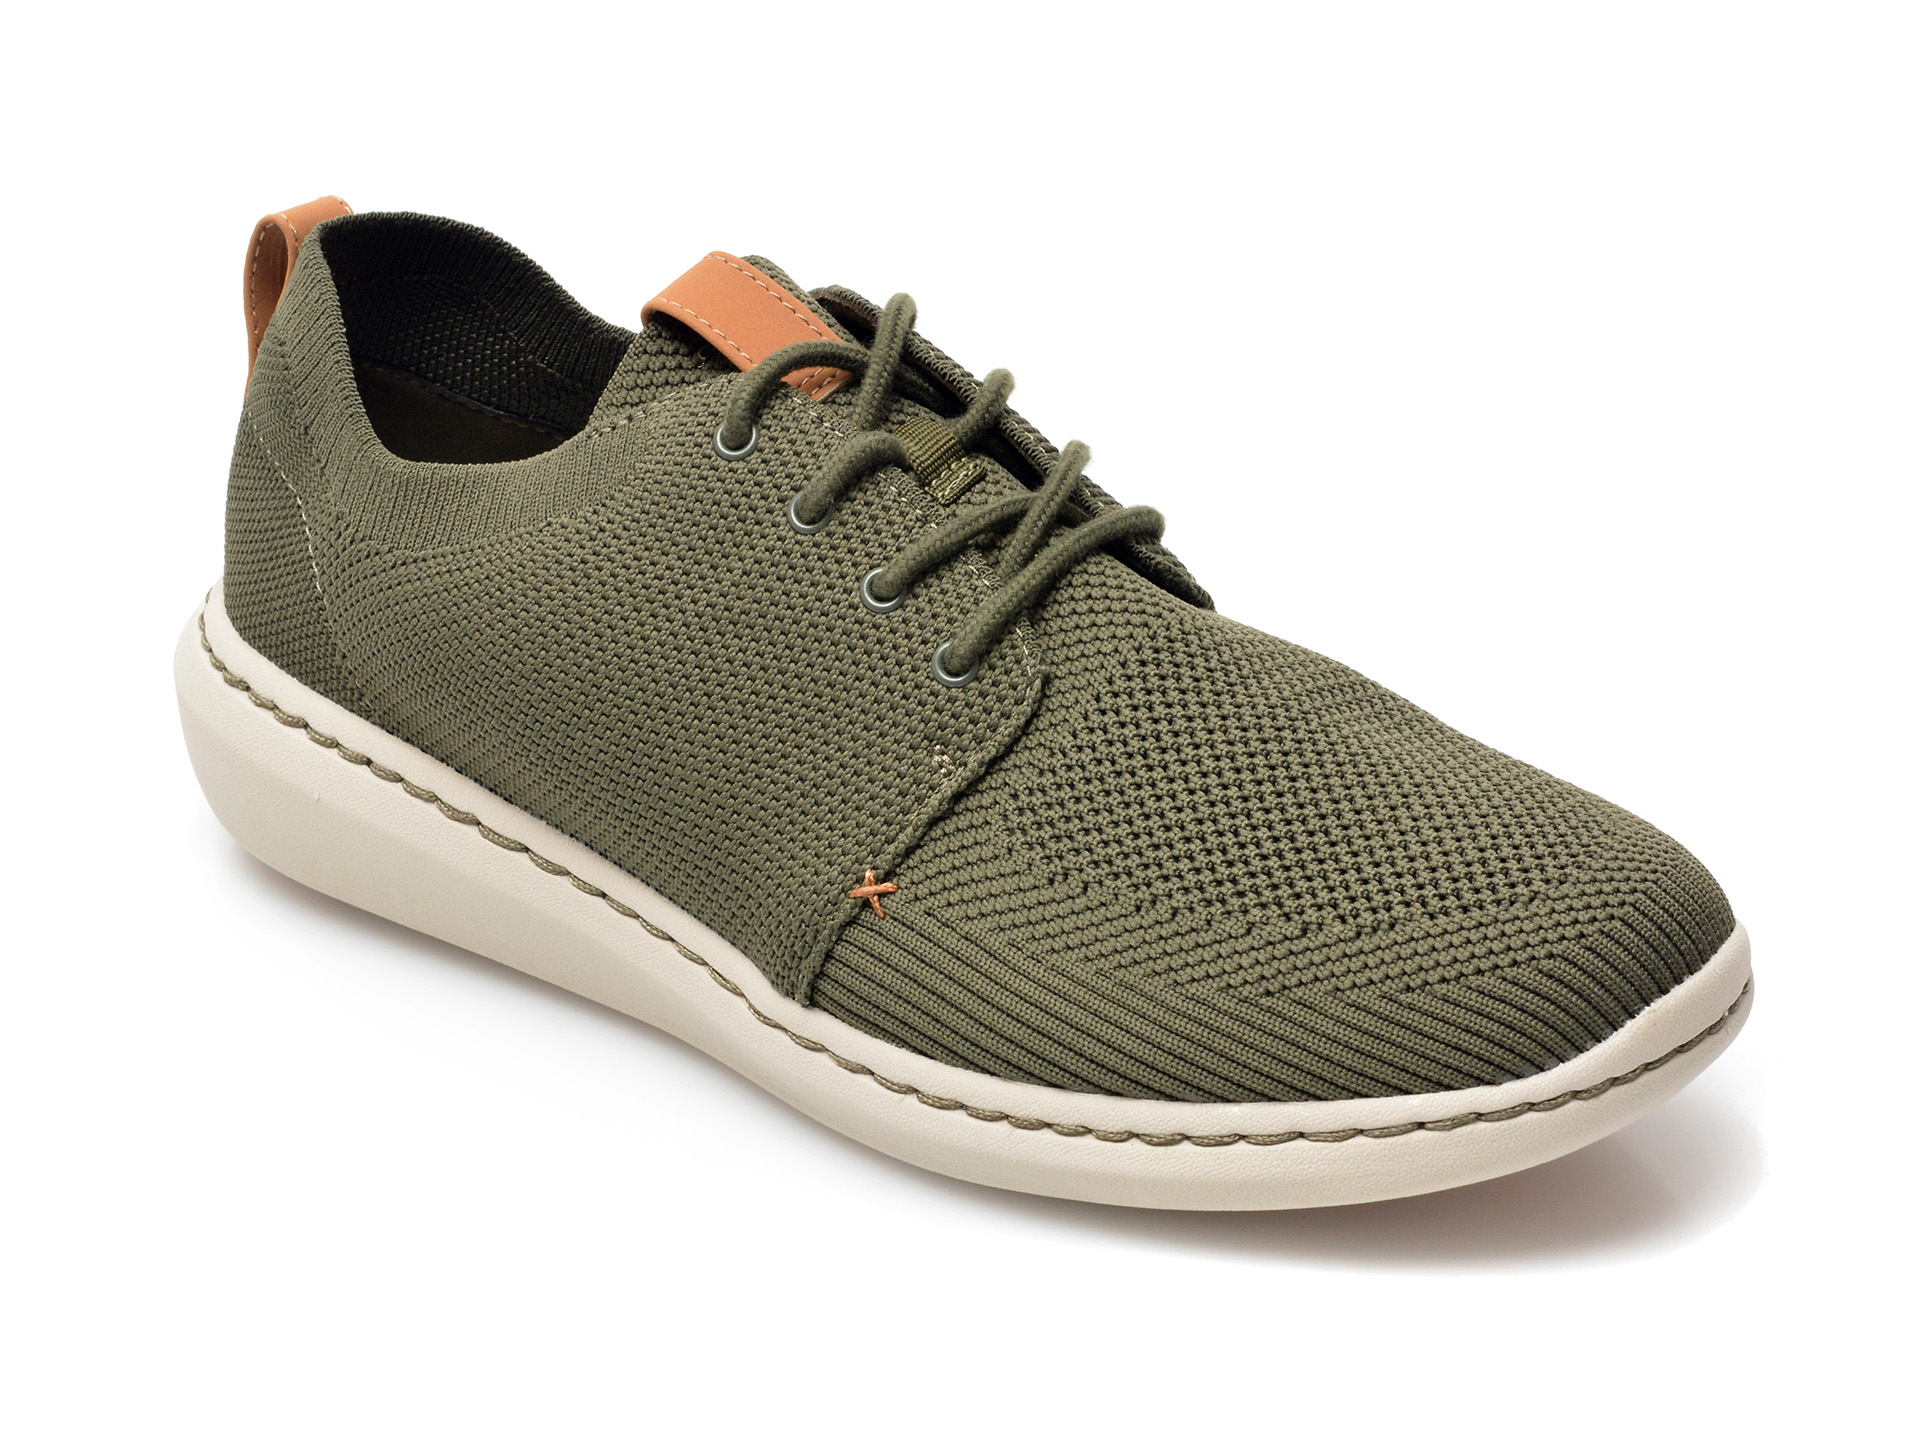 Pantofi sport CLARKS kaki, STEP URBAN MIX, din material textil Clarks imagine 2022 13clothing.ro